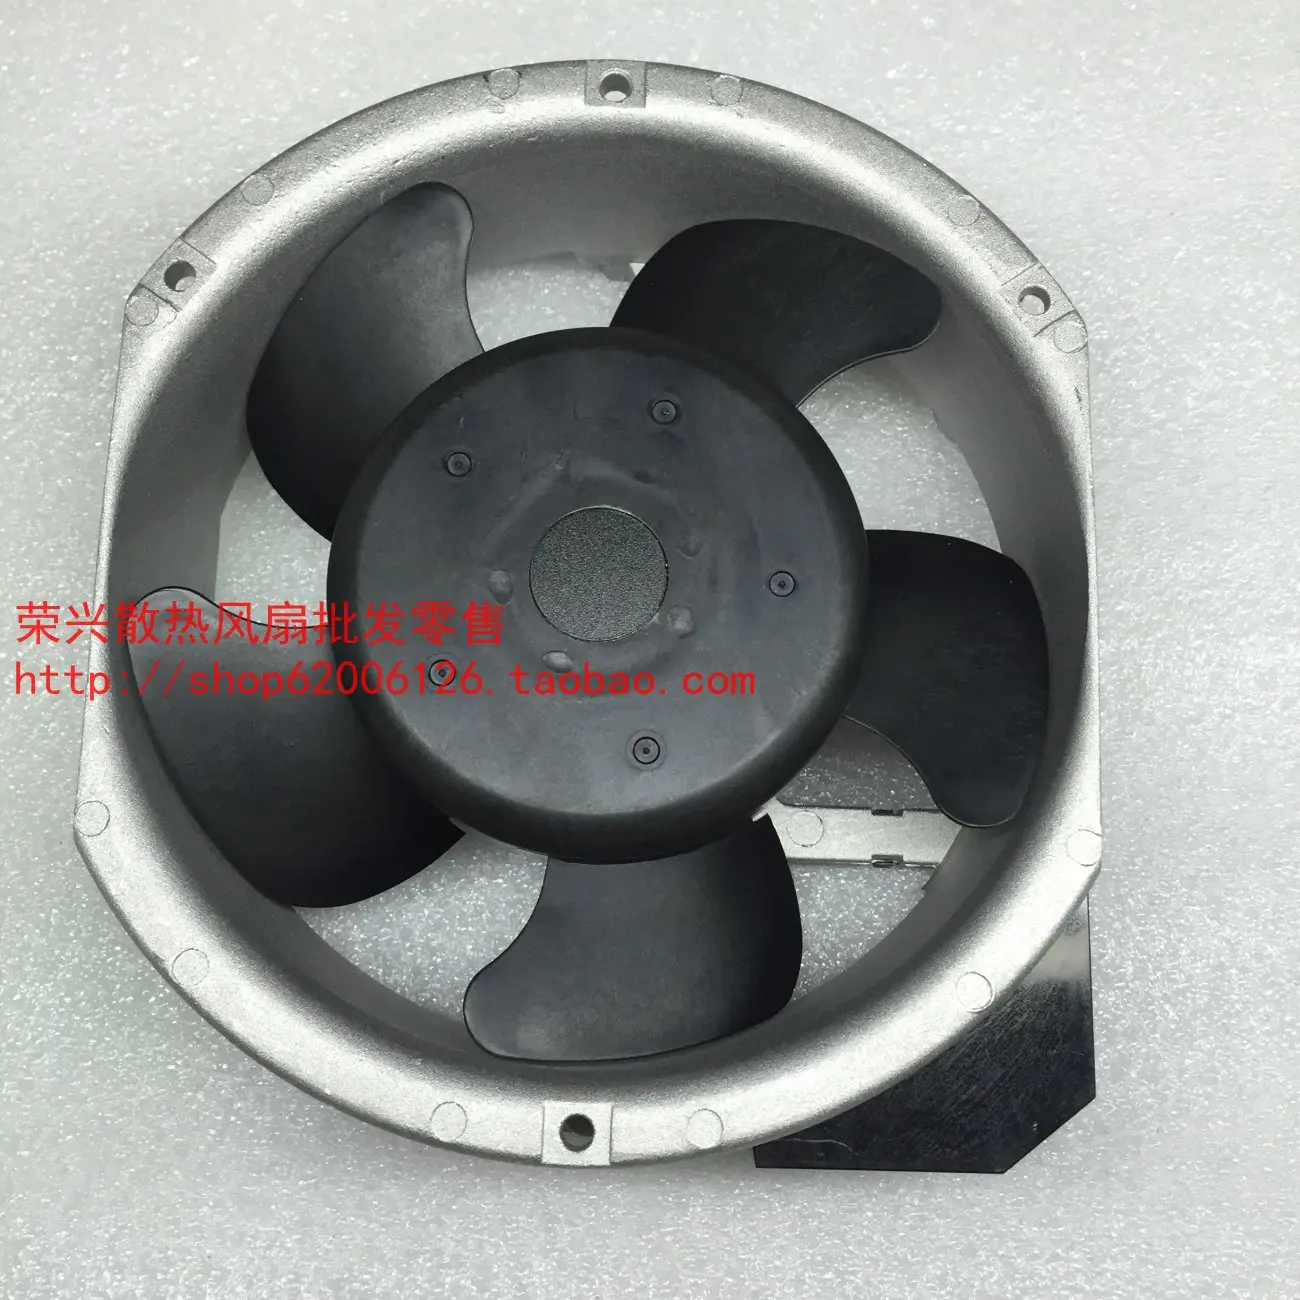 Details about   SERVO PA60B3 cooling fan 200VAC 0.2/0.15A 32/28W 50/60HZ 170*150*52MM #ME51 QL 